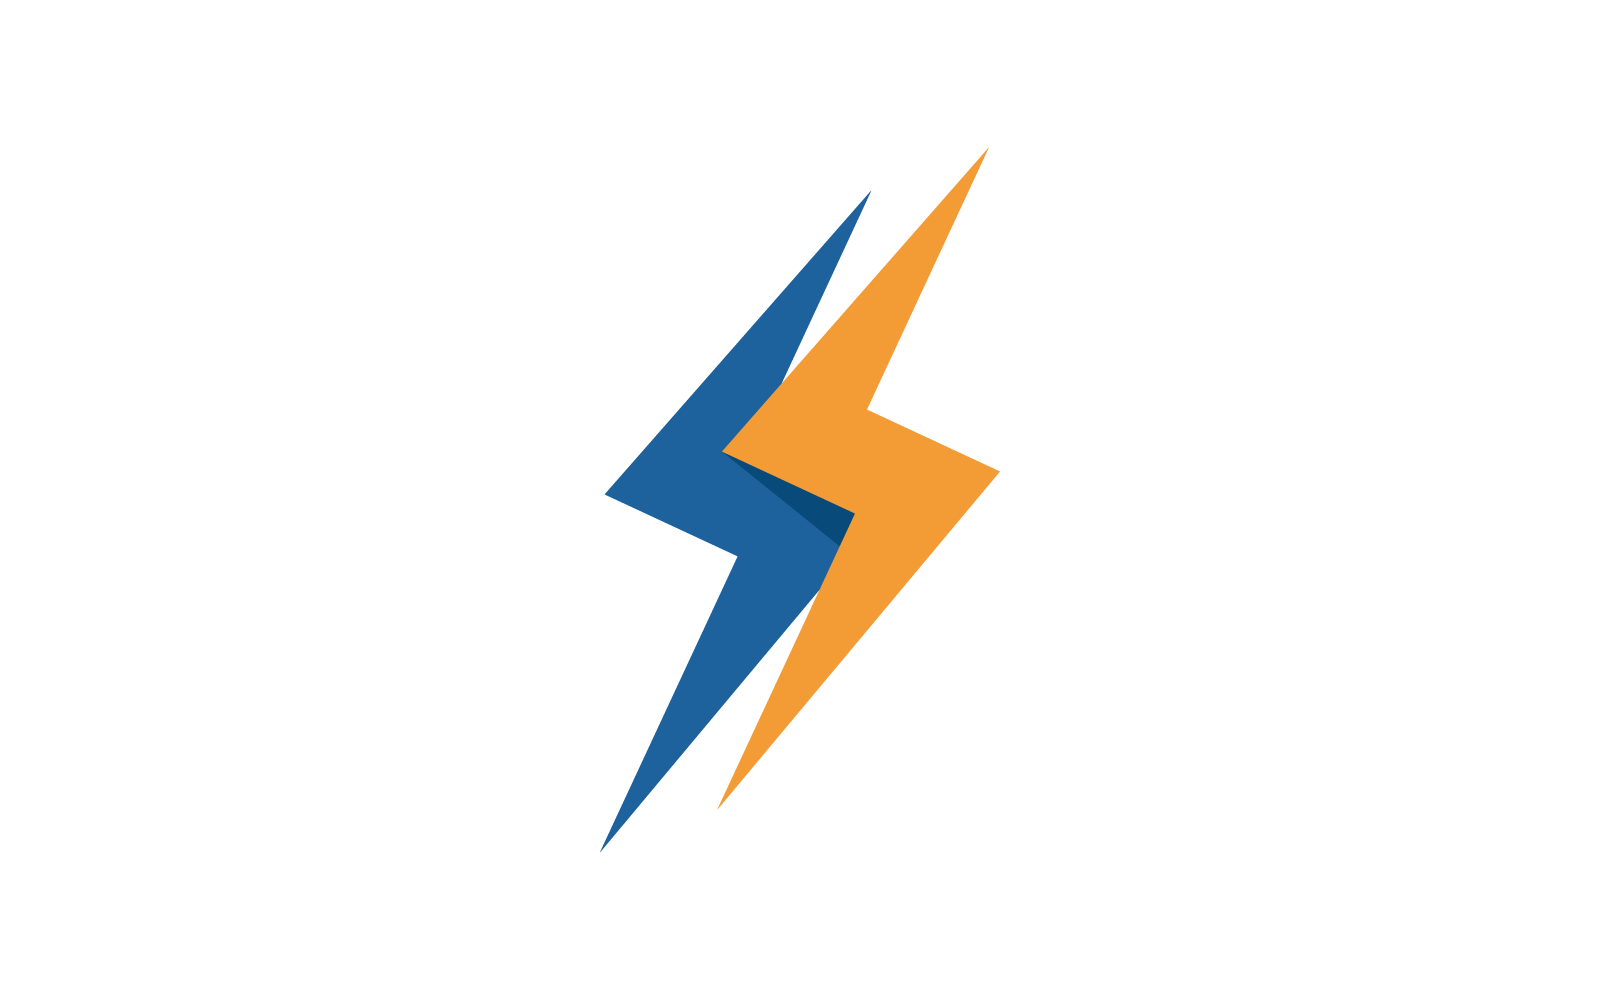 Power blesk moc energie ilustrace vektorové logo šablona